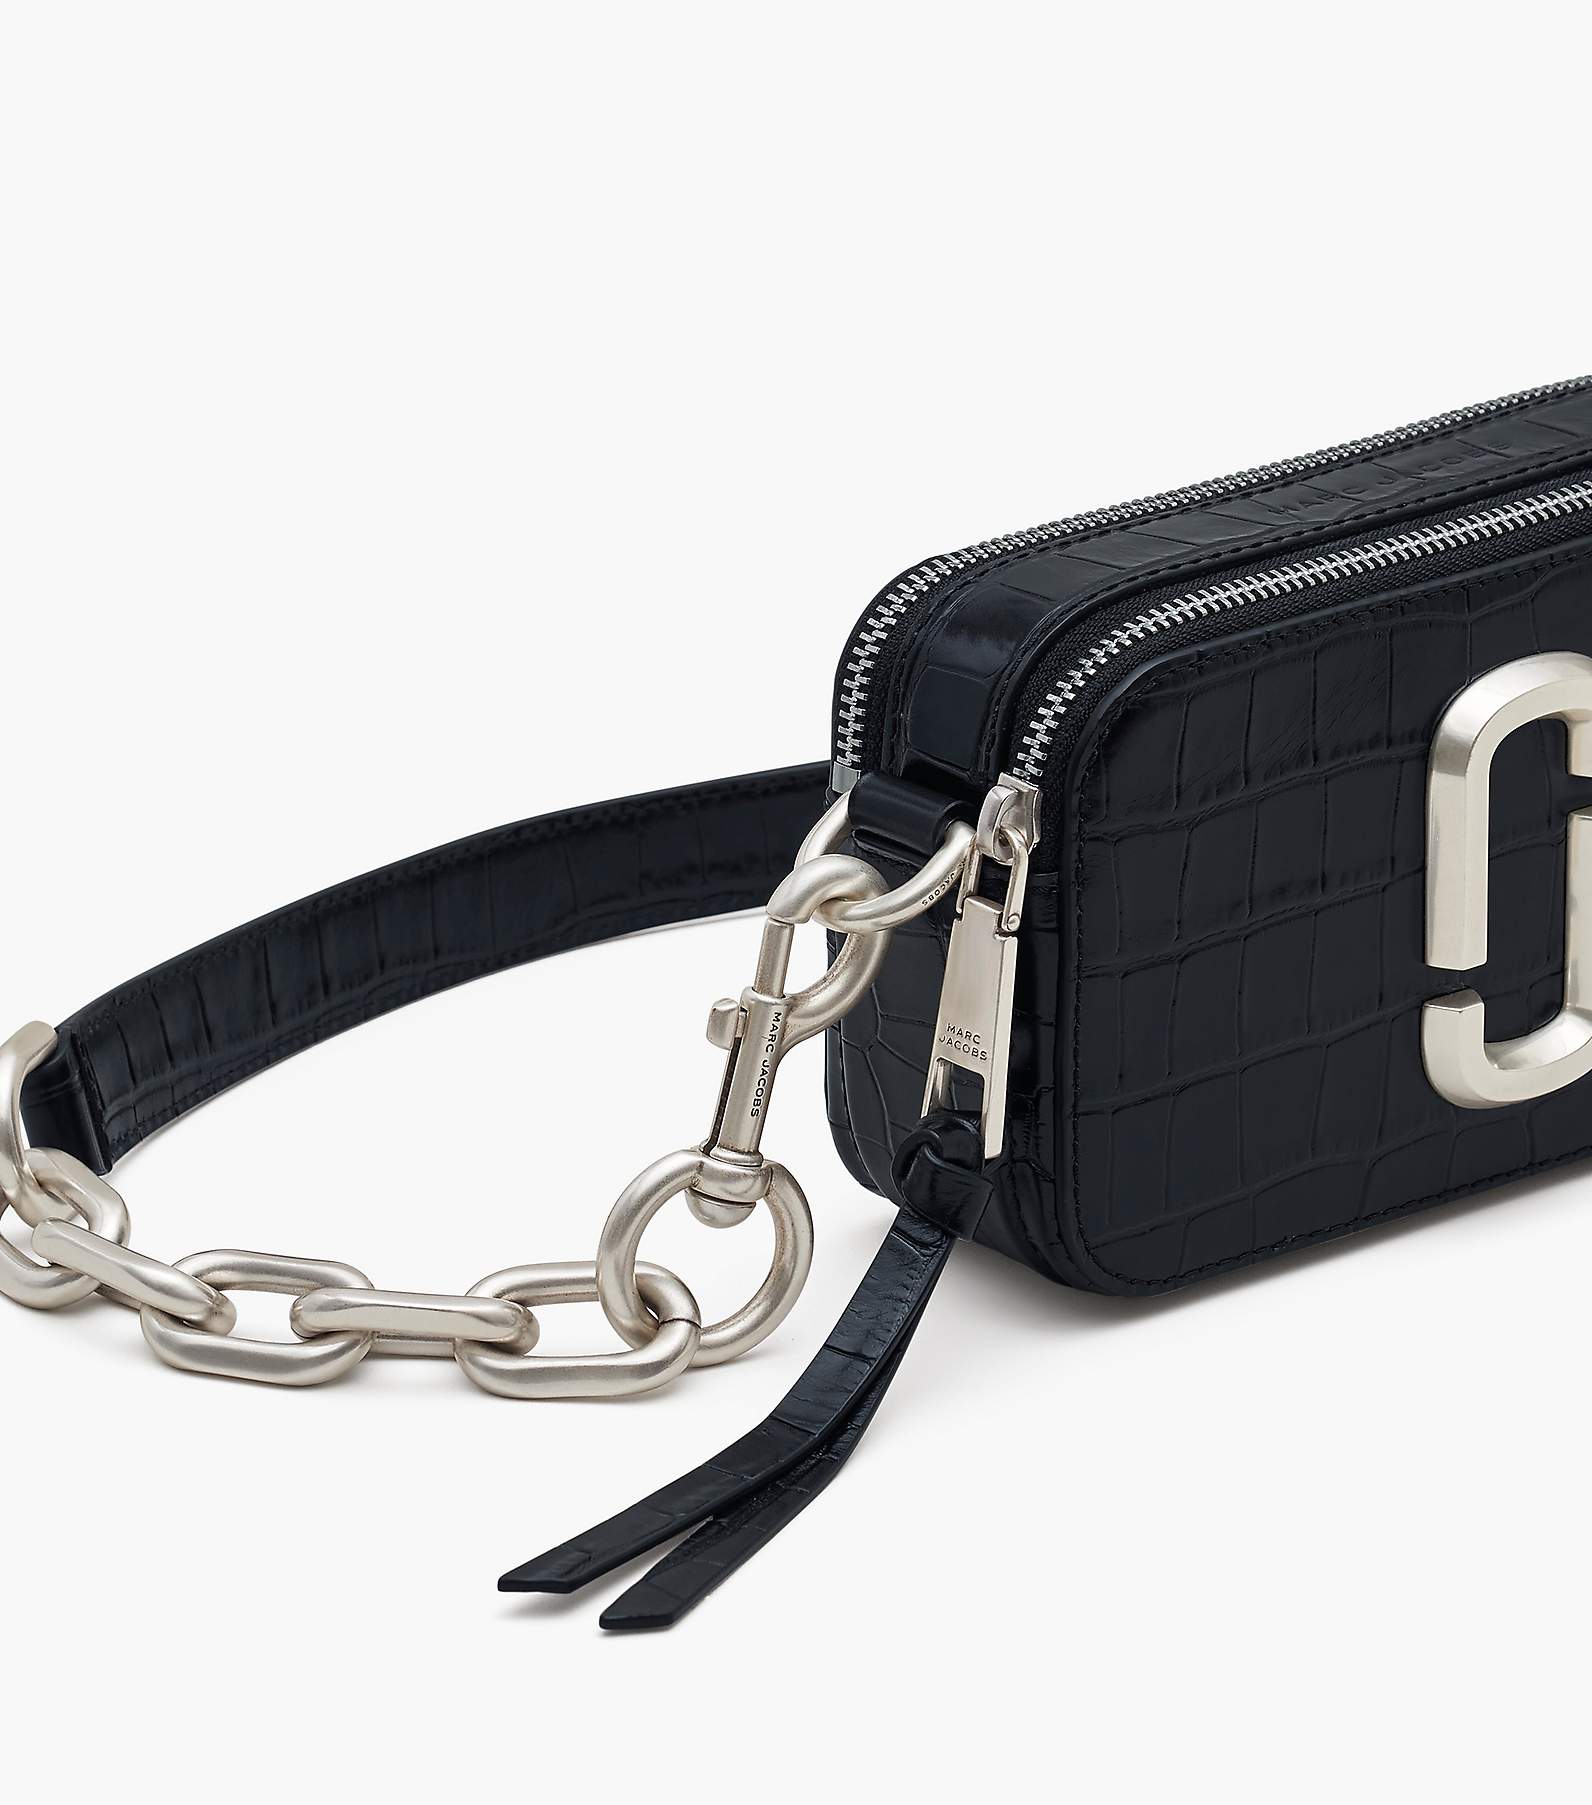 Marc Jacobs The Croc-Embossed Snapshot Crossbody Bag